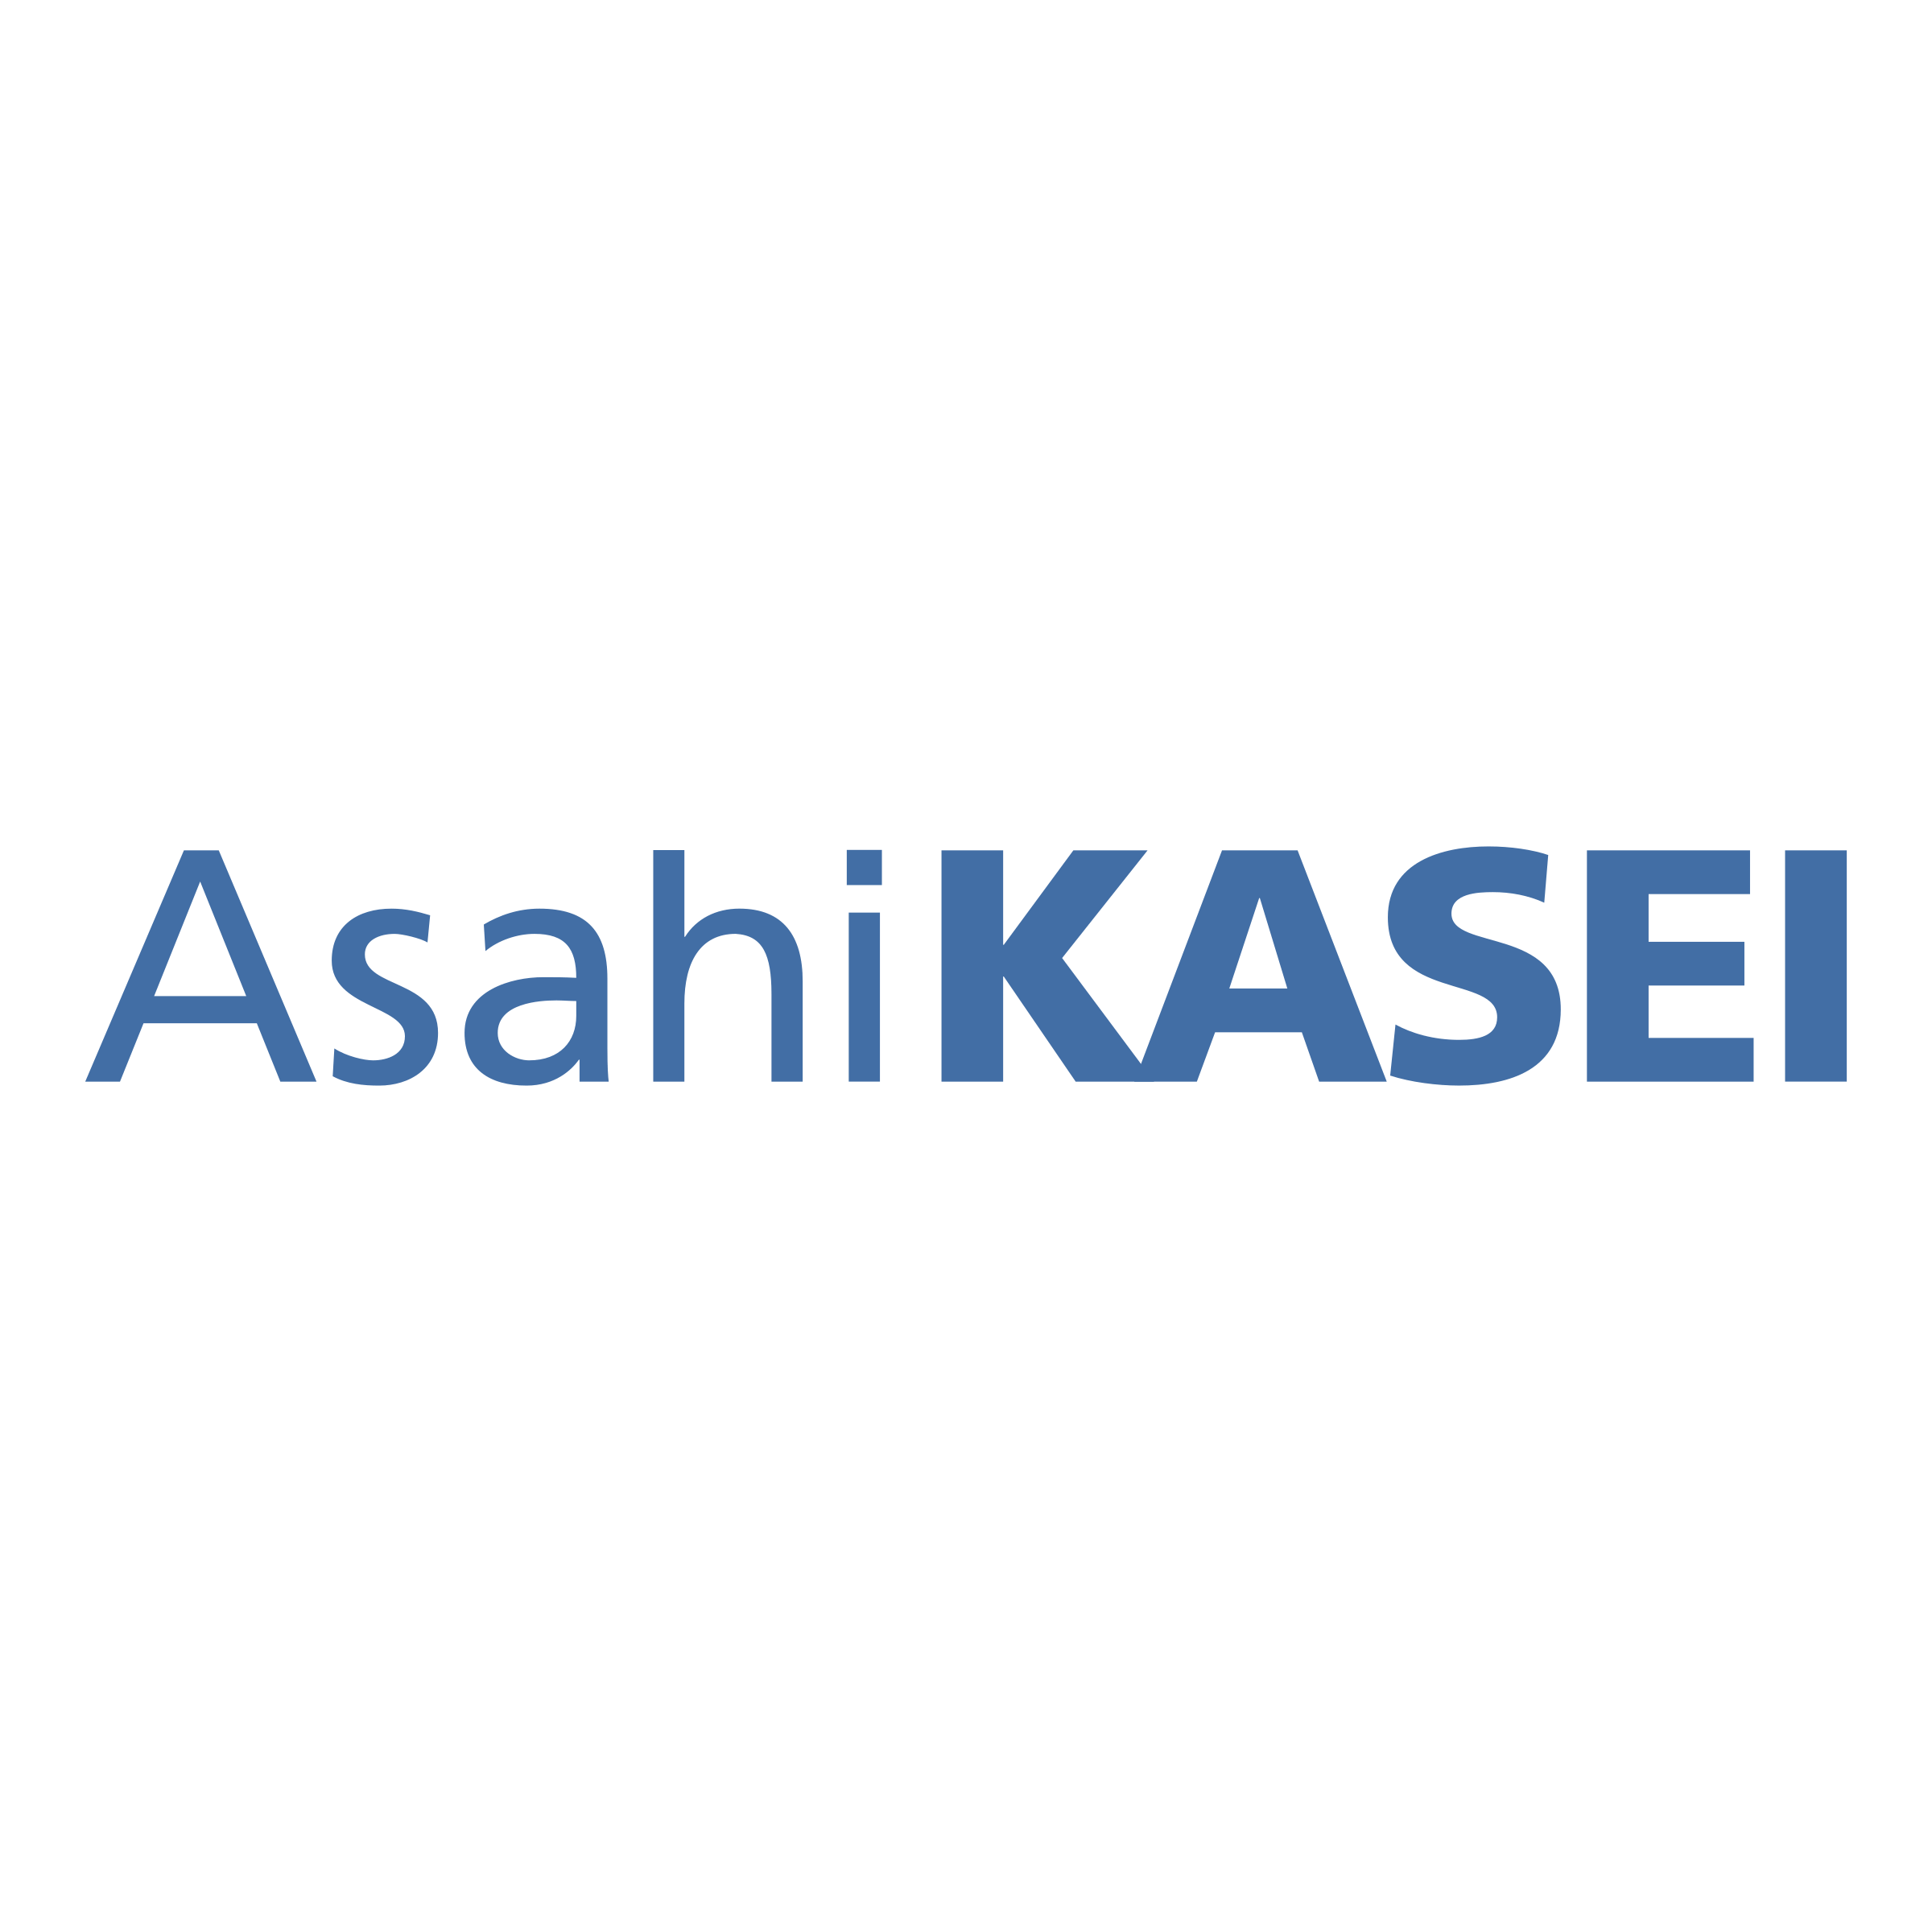 Asahi Logo - Asahi Kasei Logo PNG Transparent & SVG Vector - Freebie Supply